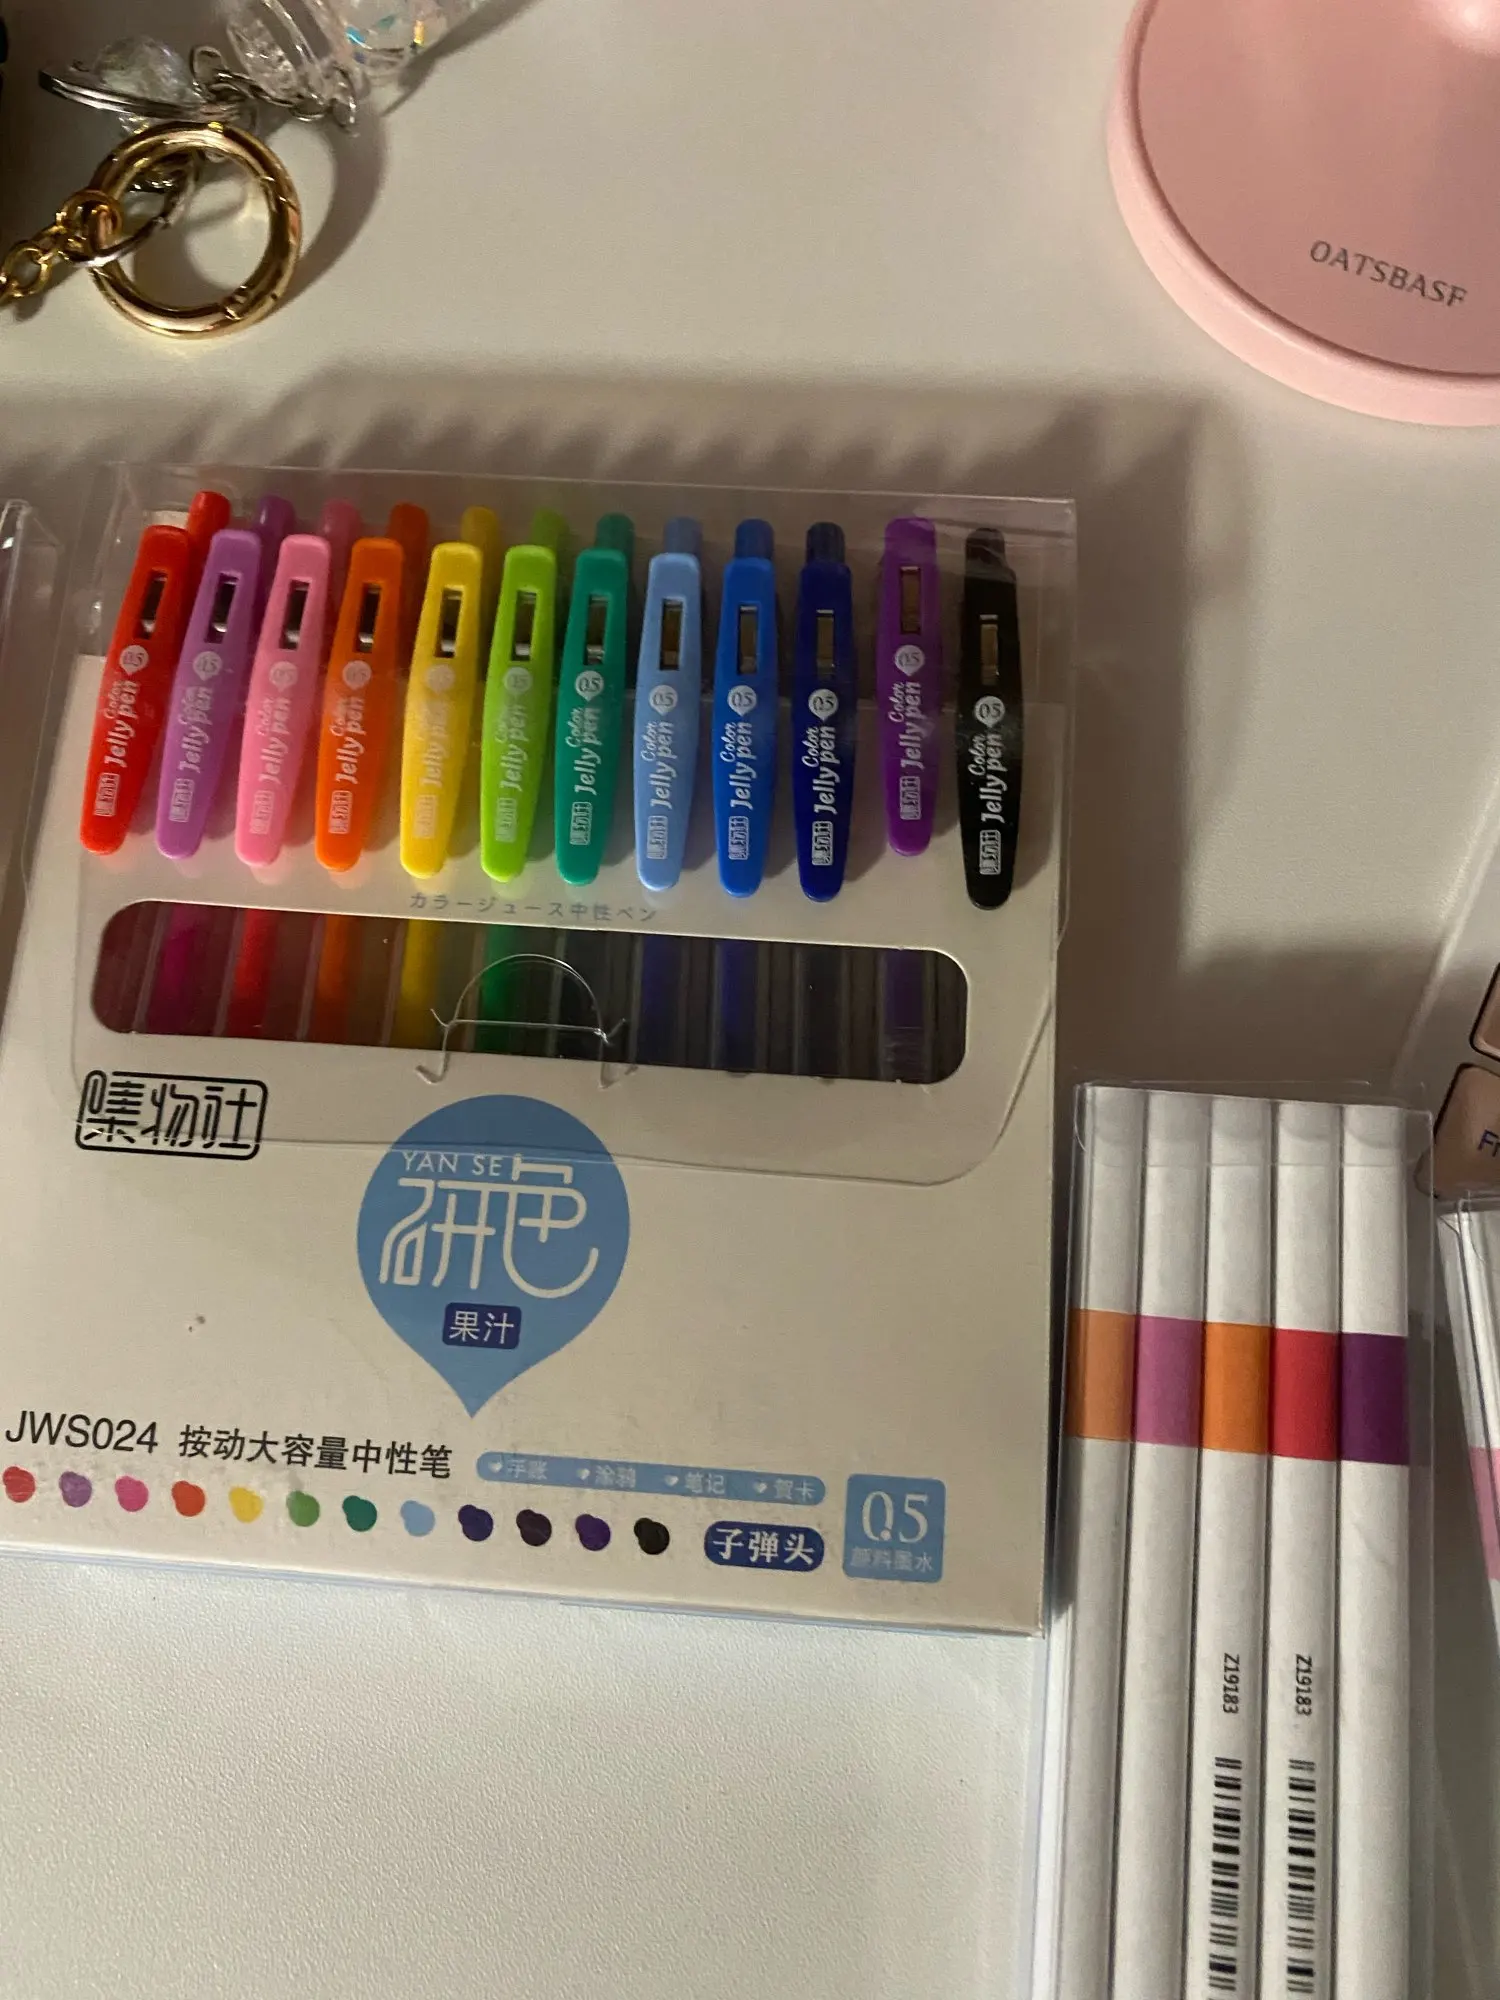 6/12pcs Jelly Color Pens Set Nice Juice Gel Ink Pen Ballpoint 0.5